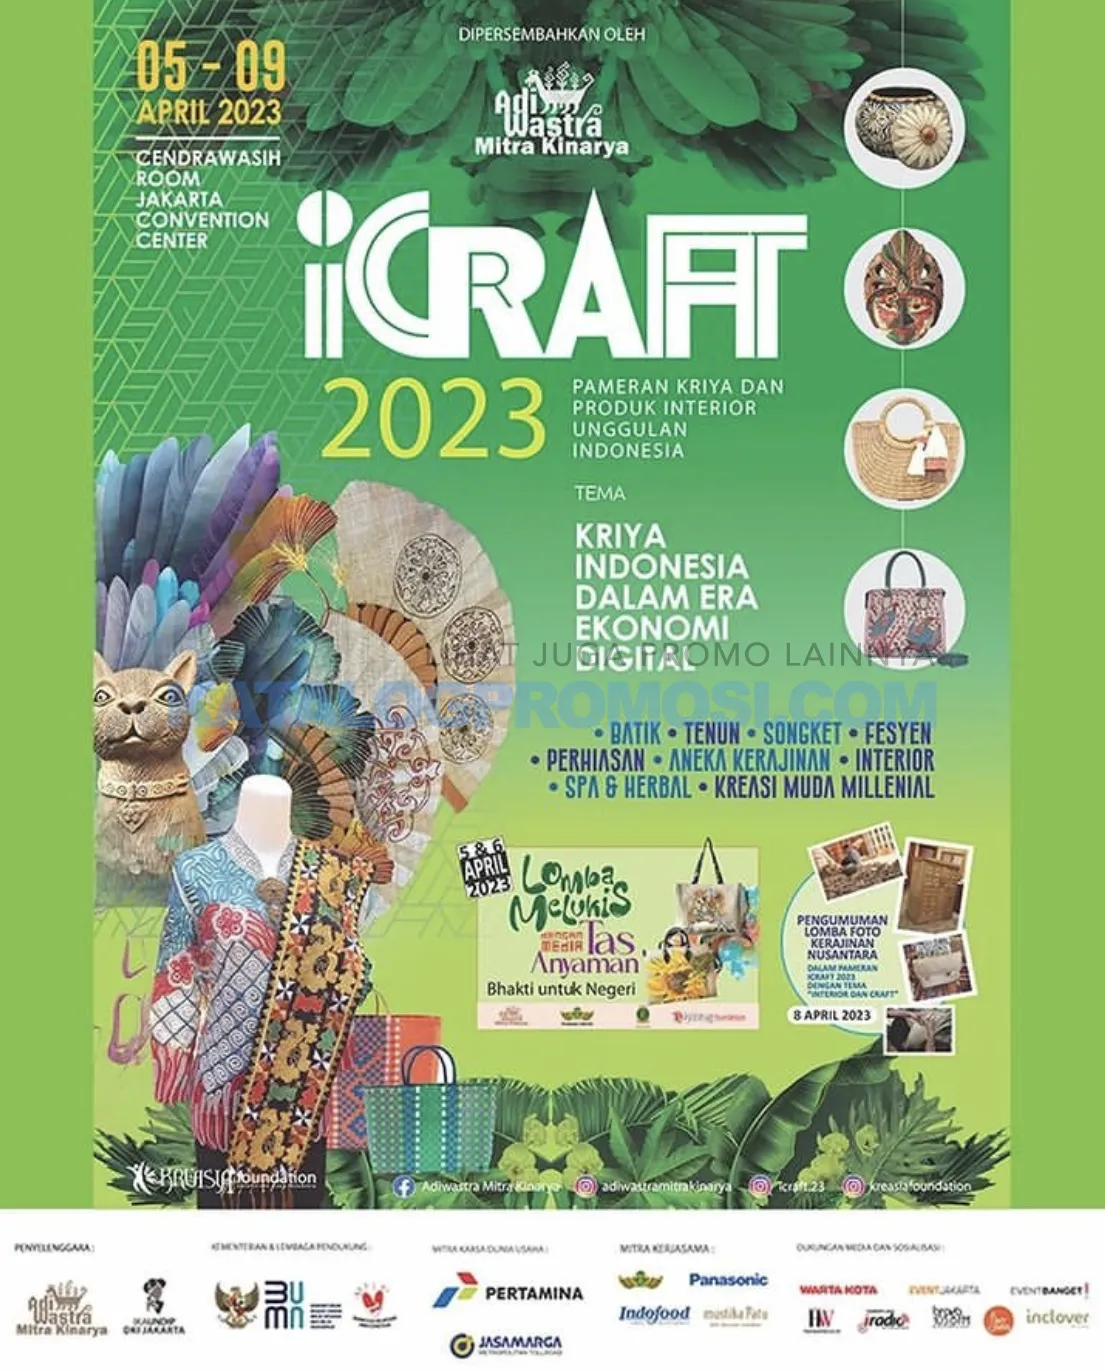 ICRAFT 2023 di JCC Senayan Jakarta